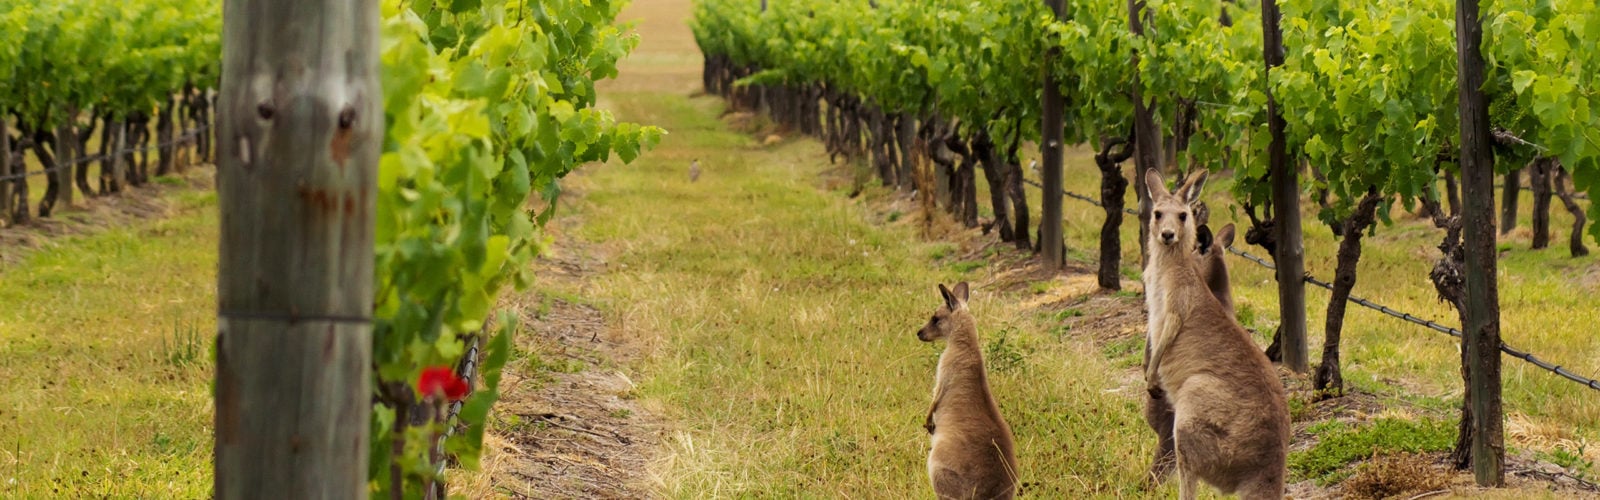 Hunter valley kangaroos in the vineyard